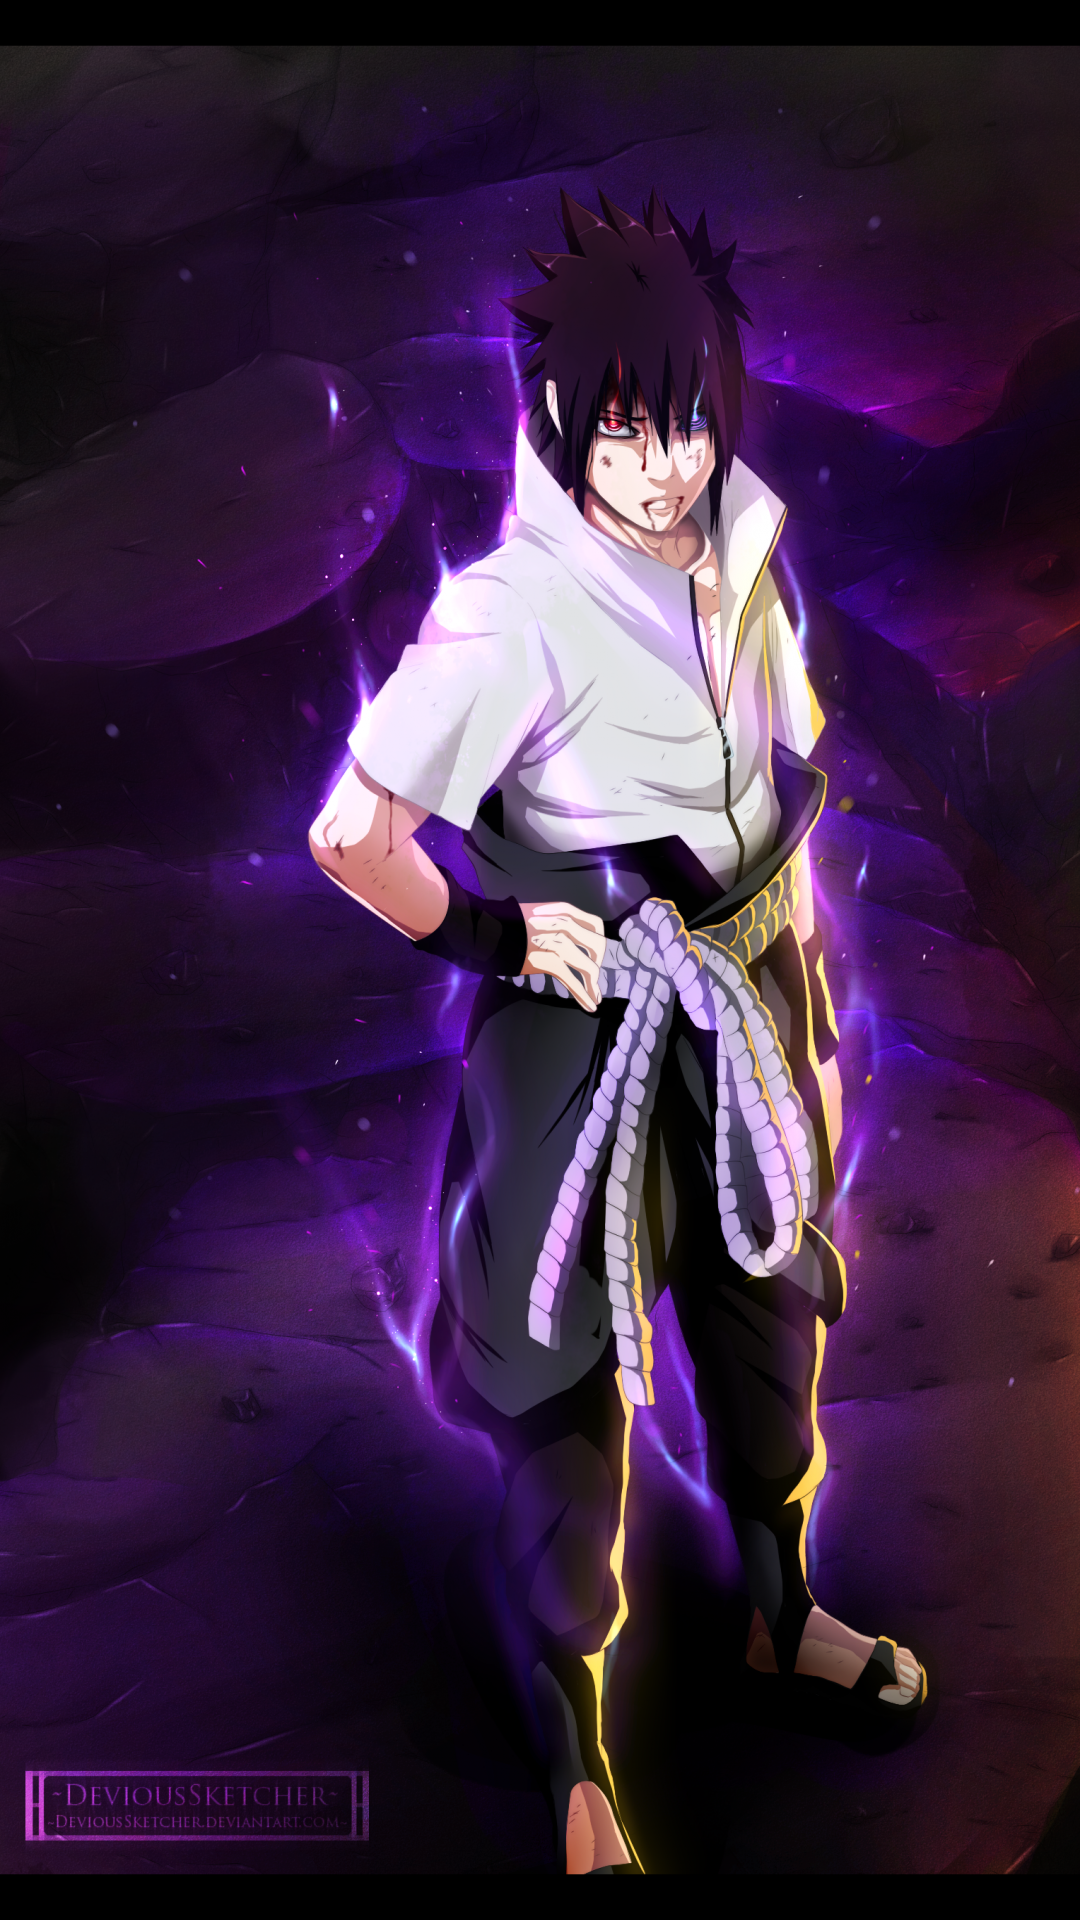 fond d'écran sasuke uchiha iphone,anime,dessin animé,violet,oeuvre de cg,illustration